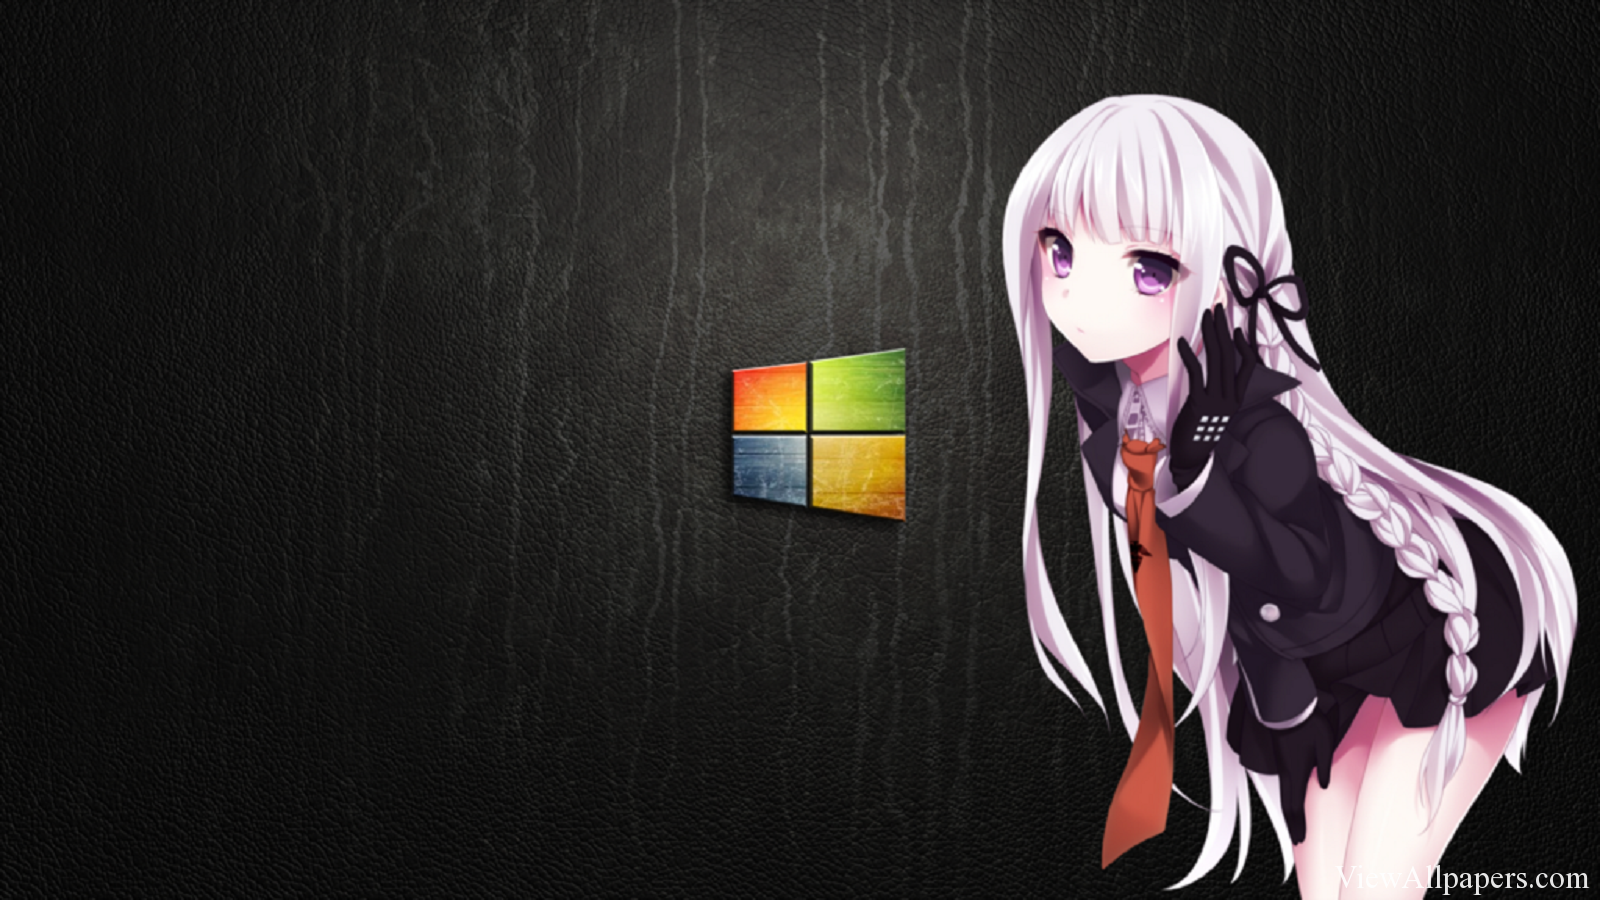 Wallpaper Windows Anime For Pc Puters Desktop